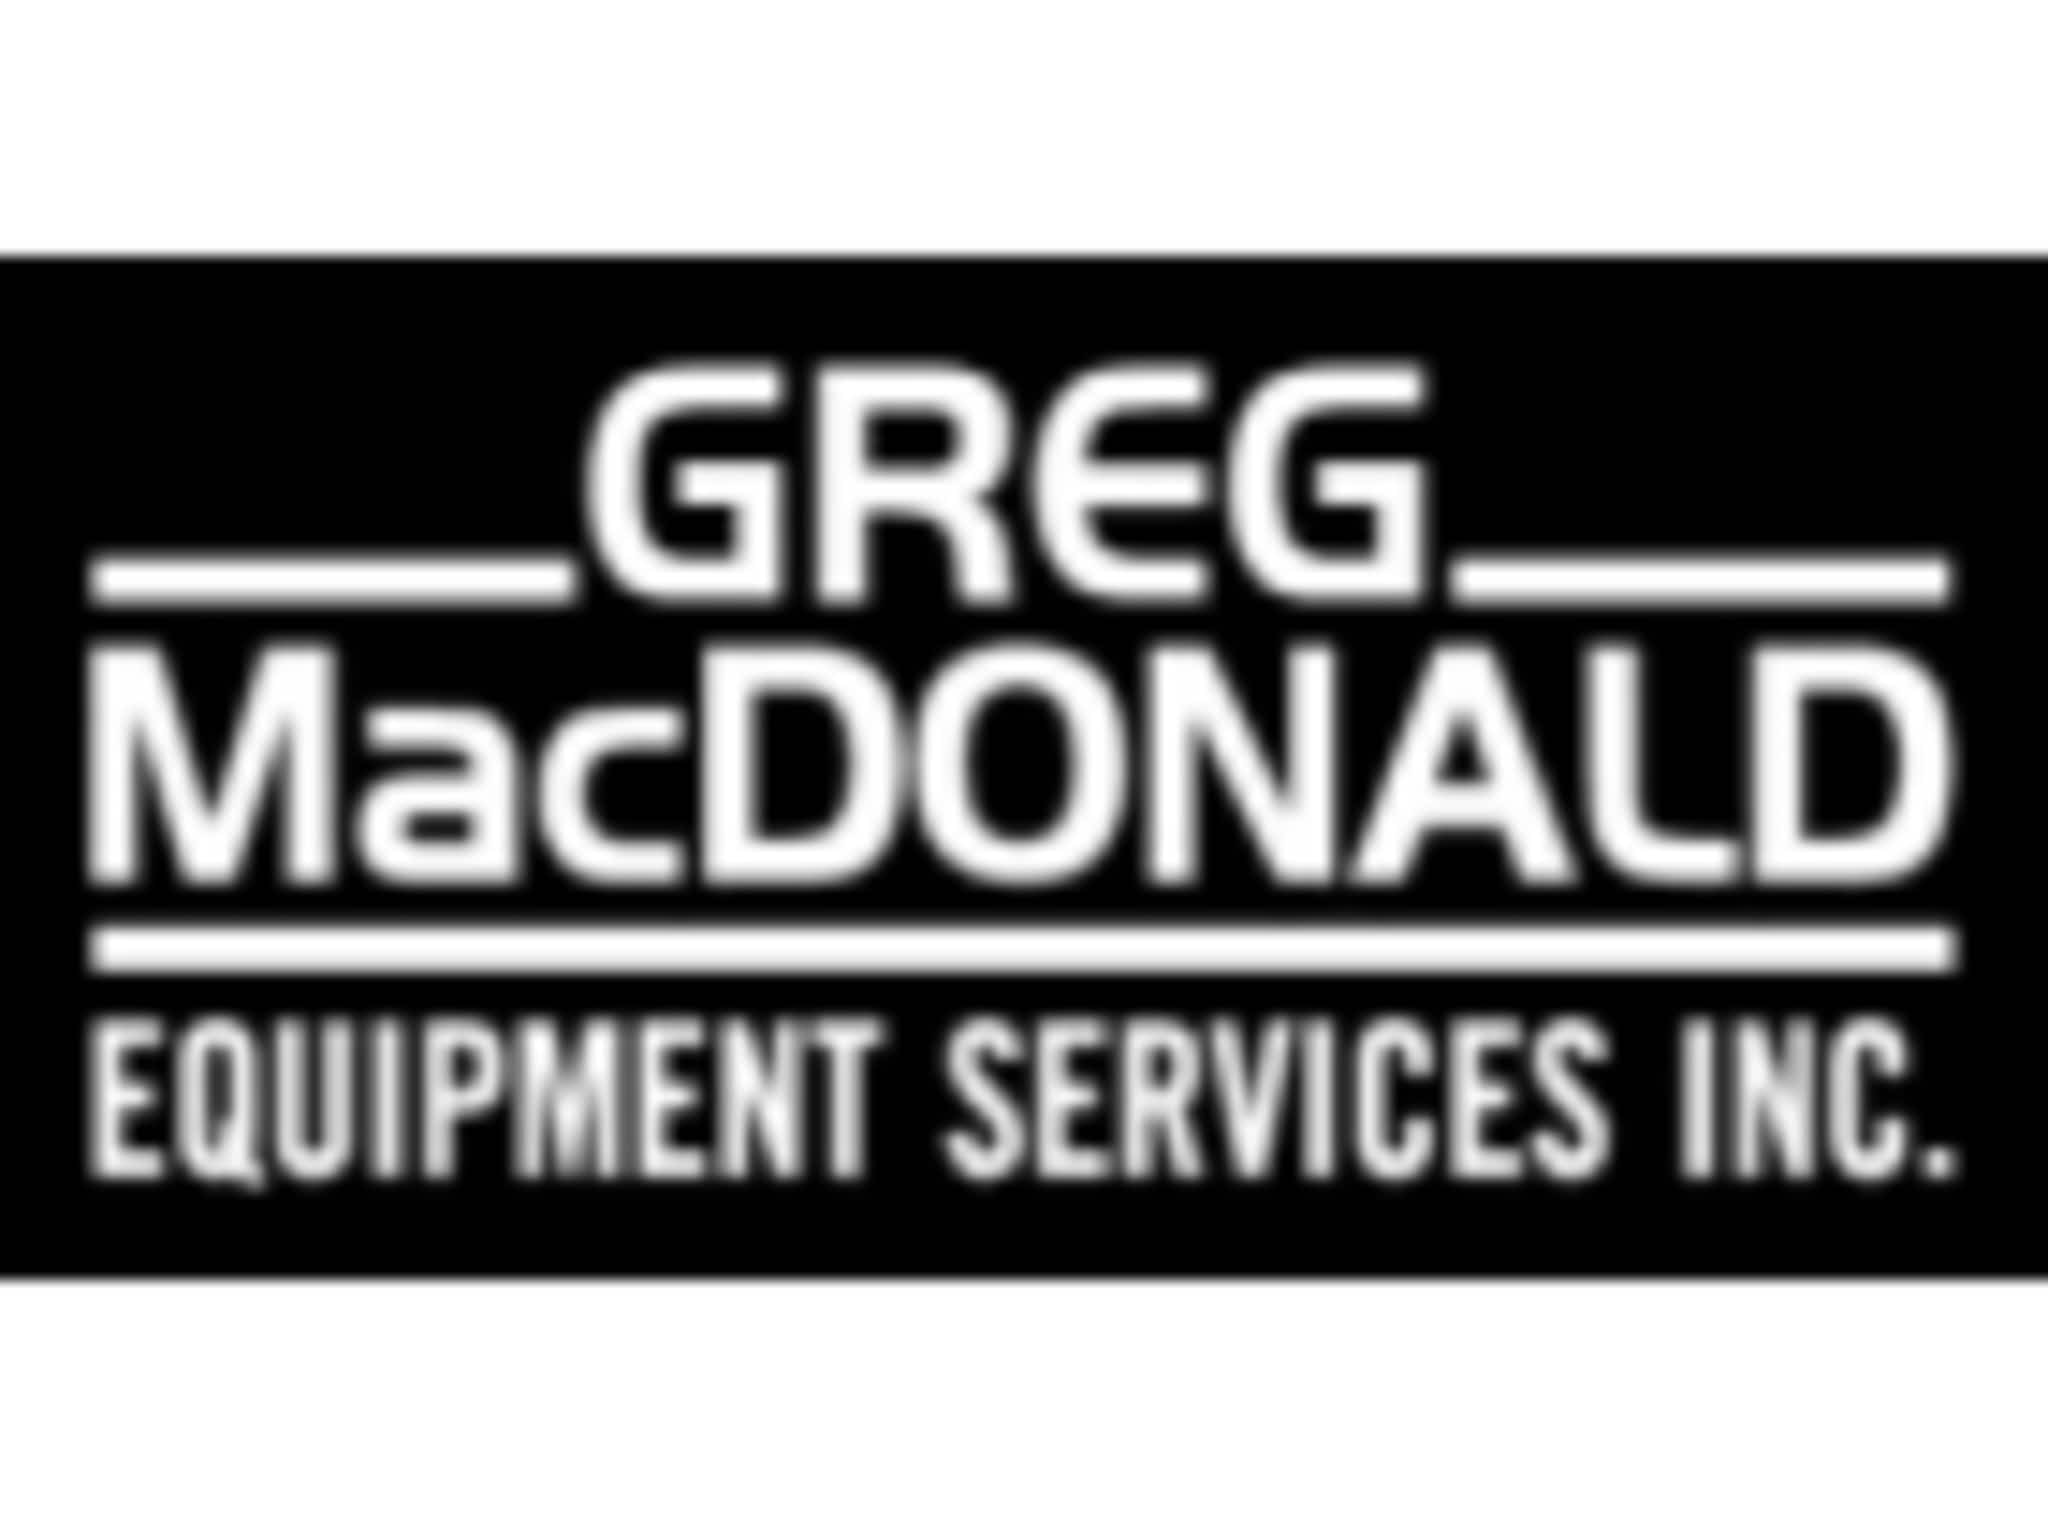 photo Greg MacDonald Equipment Services Inc